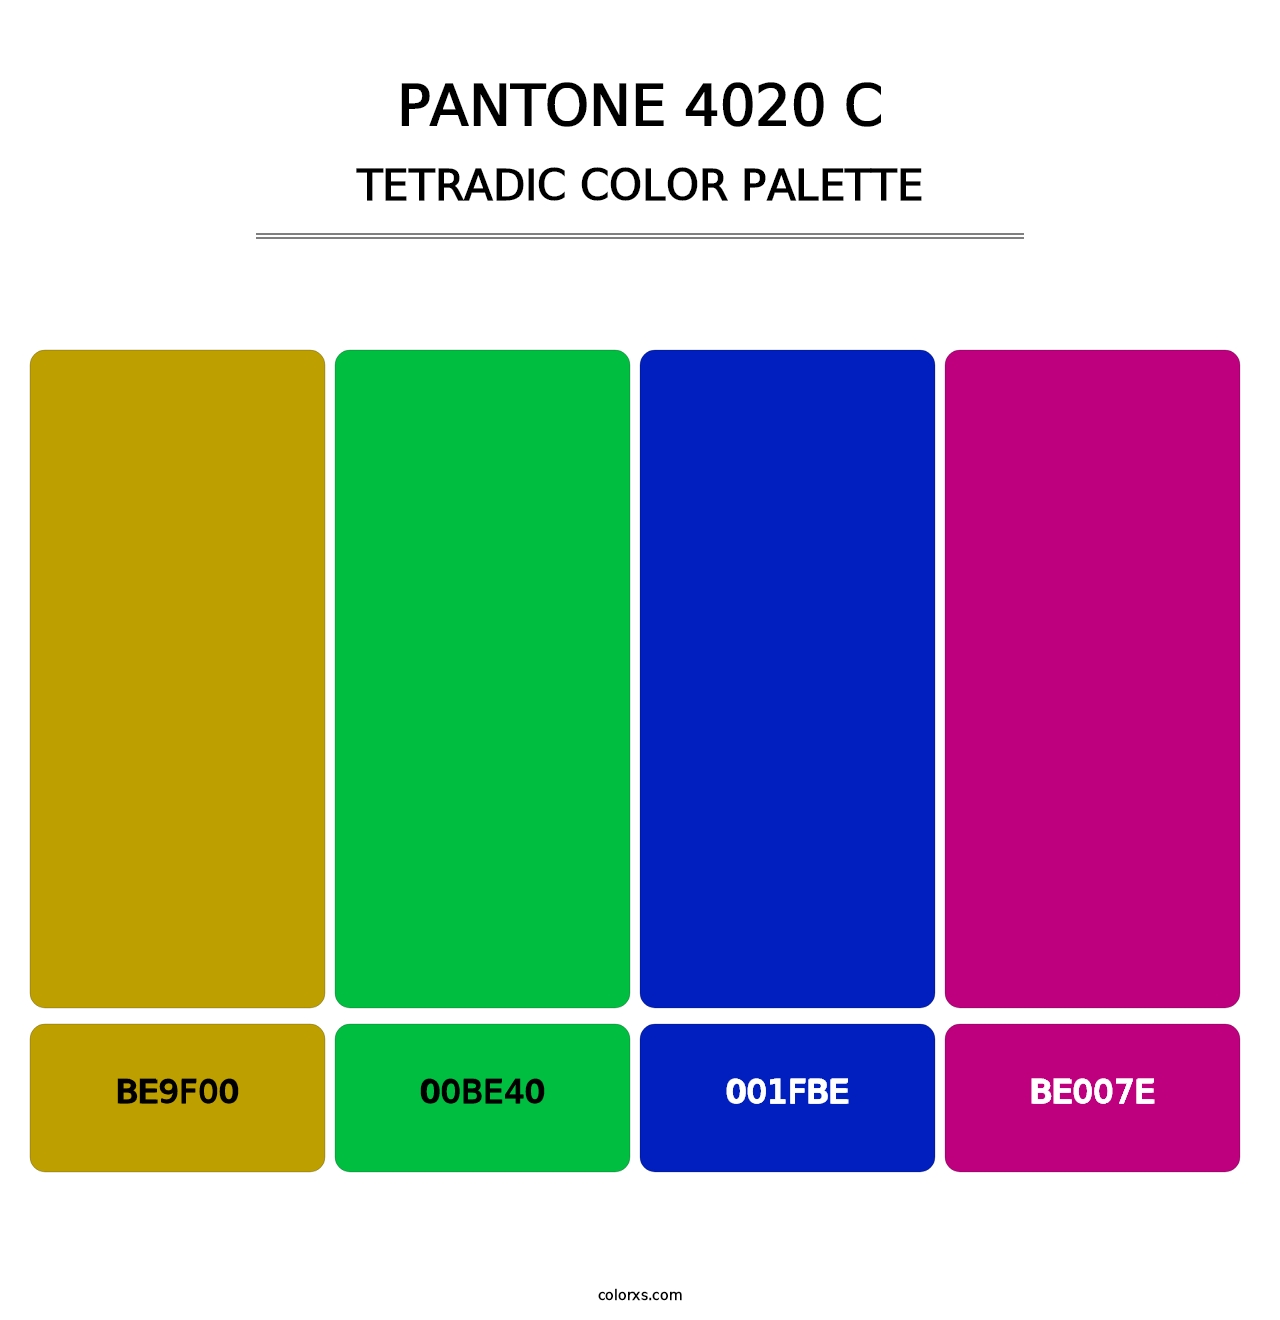 PANTONE 4020 C - Tetradic Color Palette